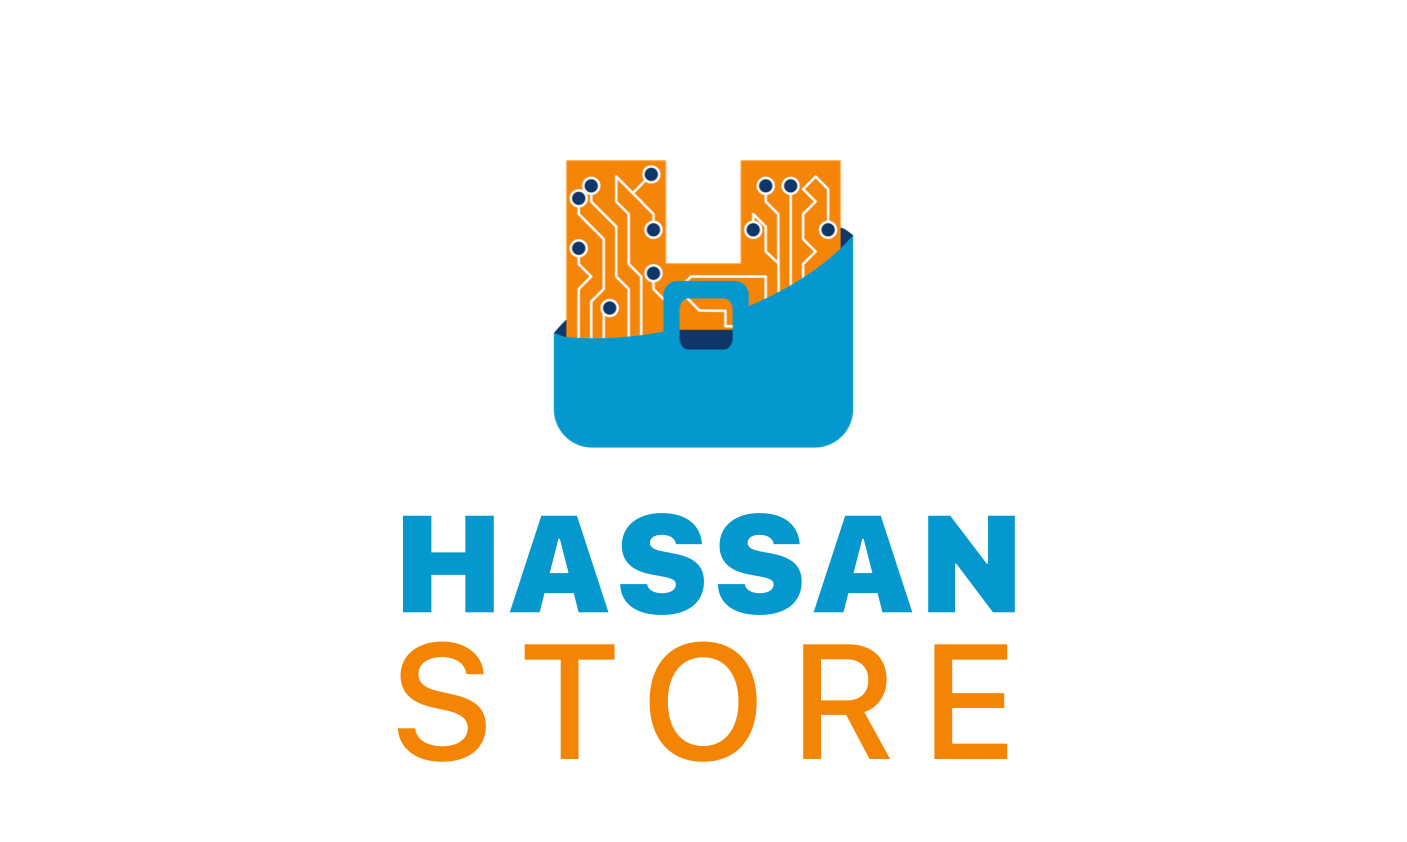 Hassan Said